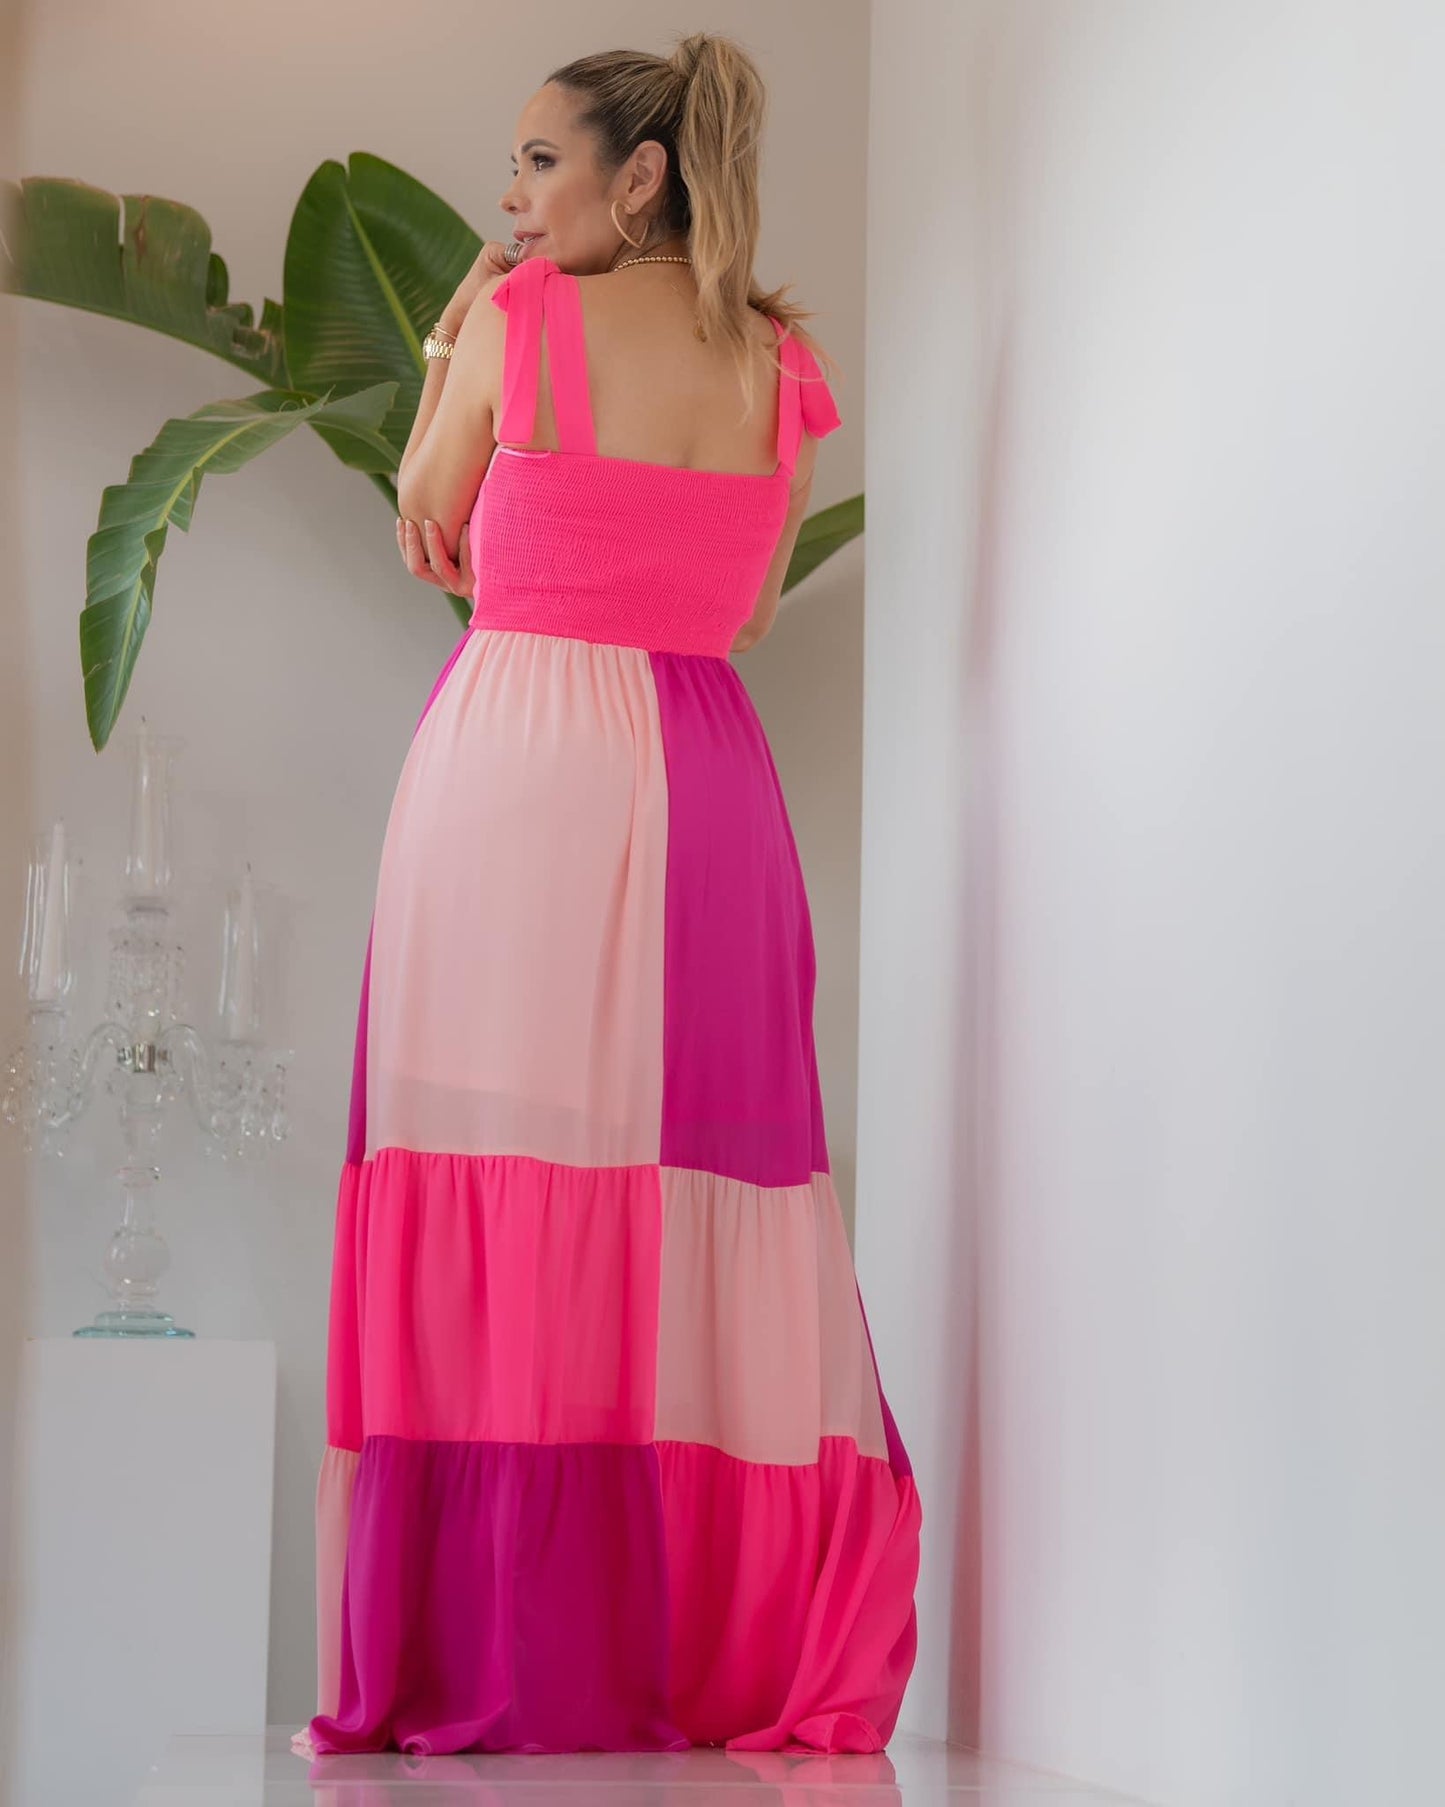 Neon pink dress